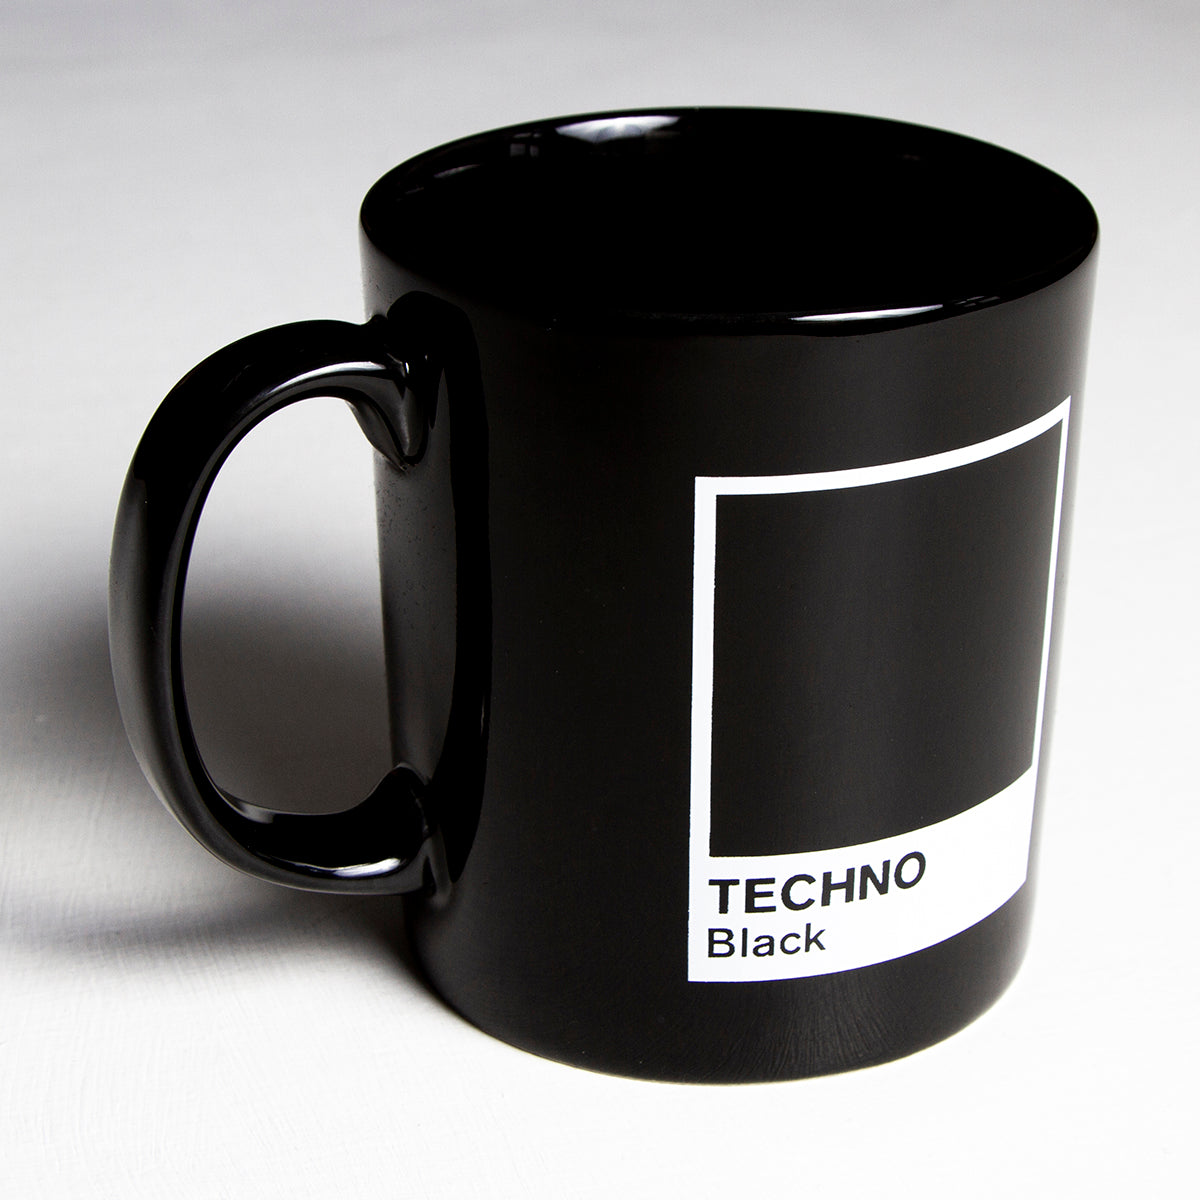 Techno Black - Mug - Wasted Heroes